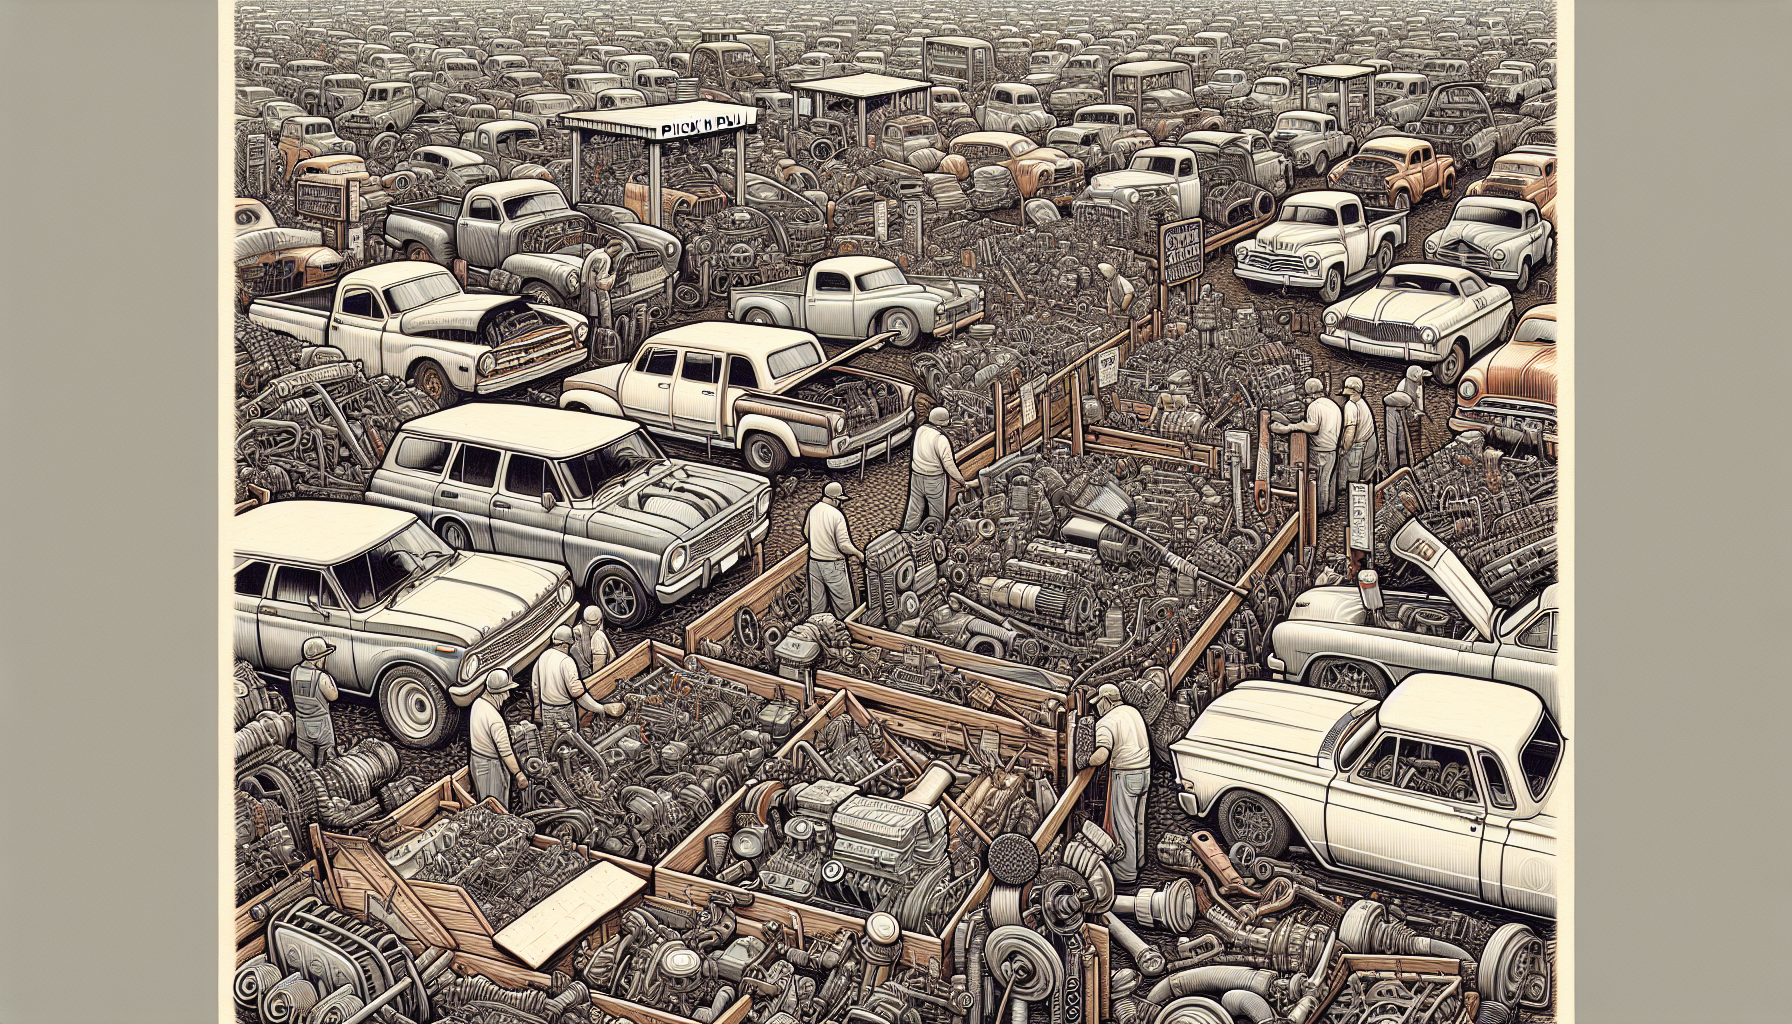 Illustration of a junkyard with various car parts